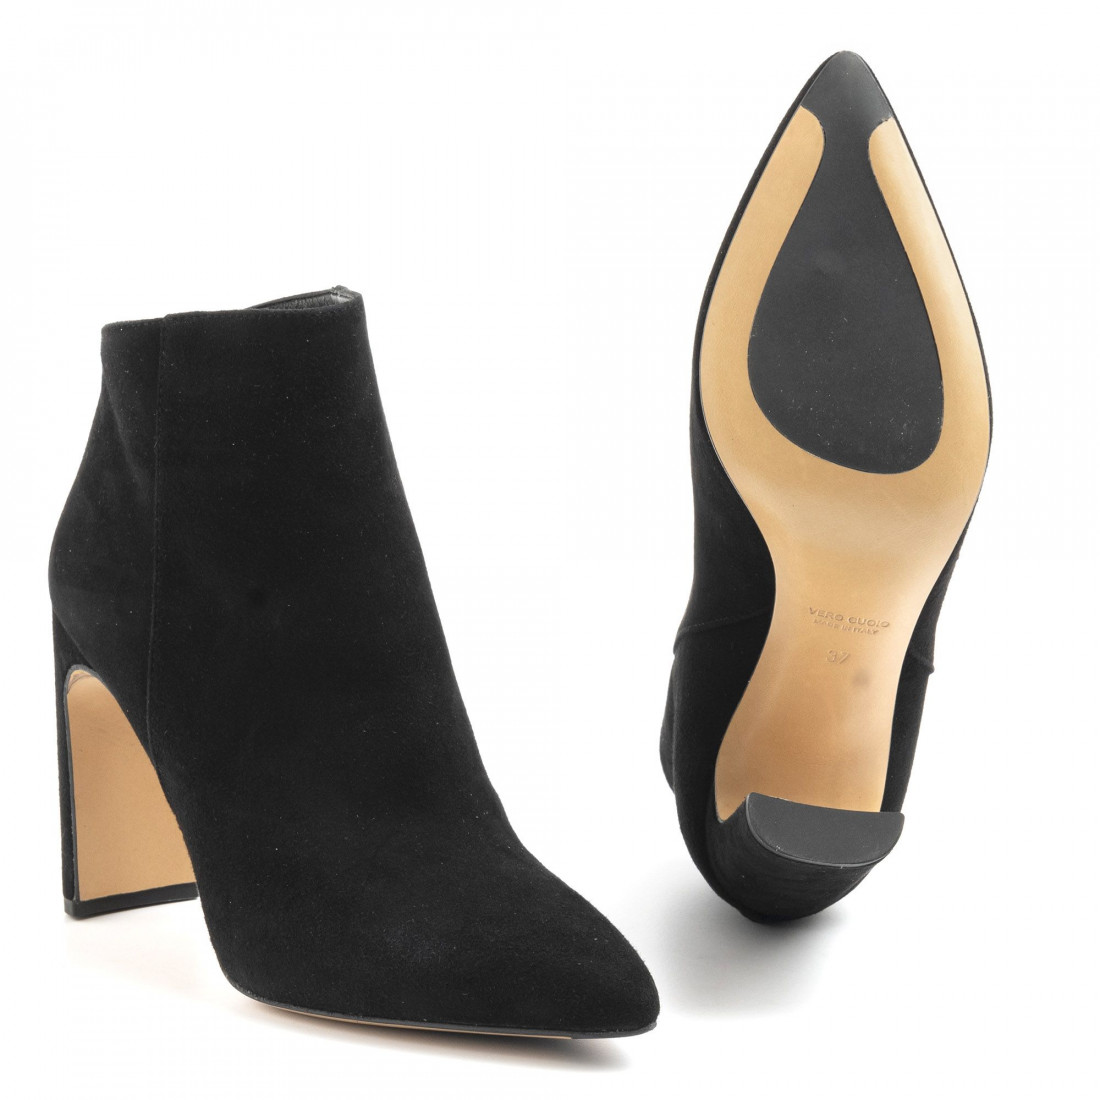 Elegant Sangiorgio heeled ankle boots in black suede